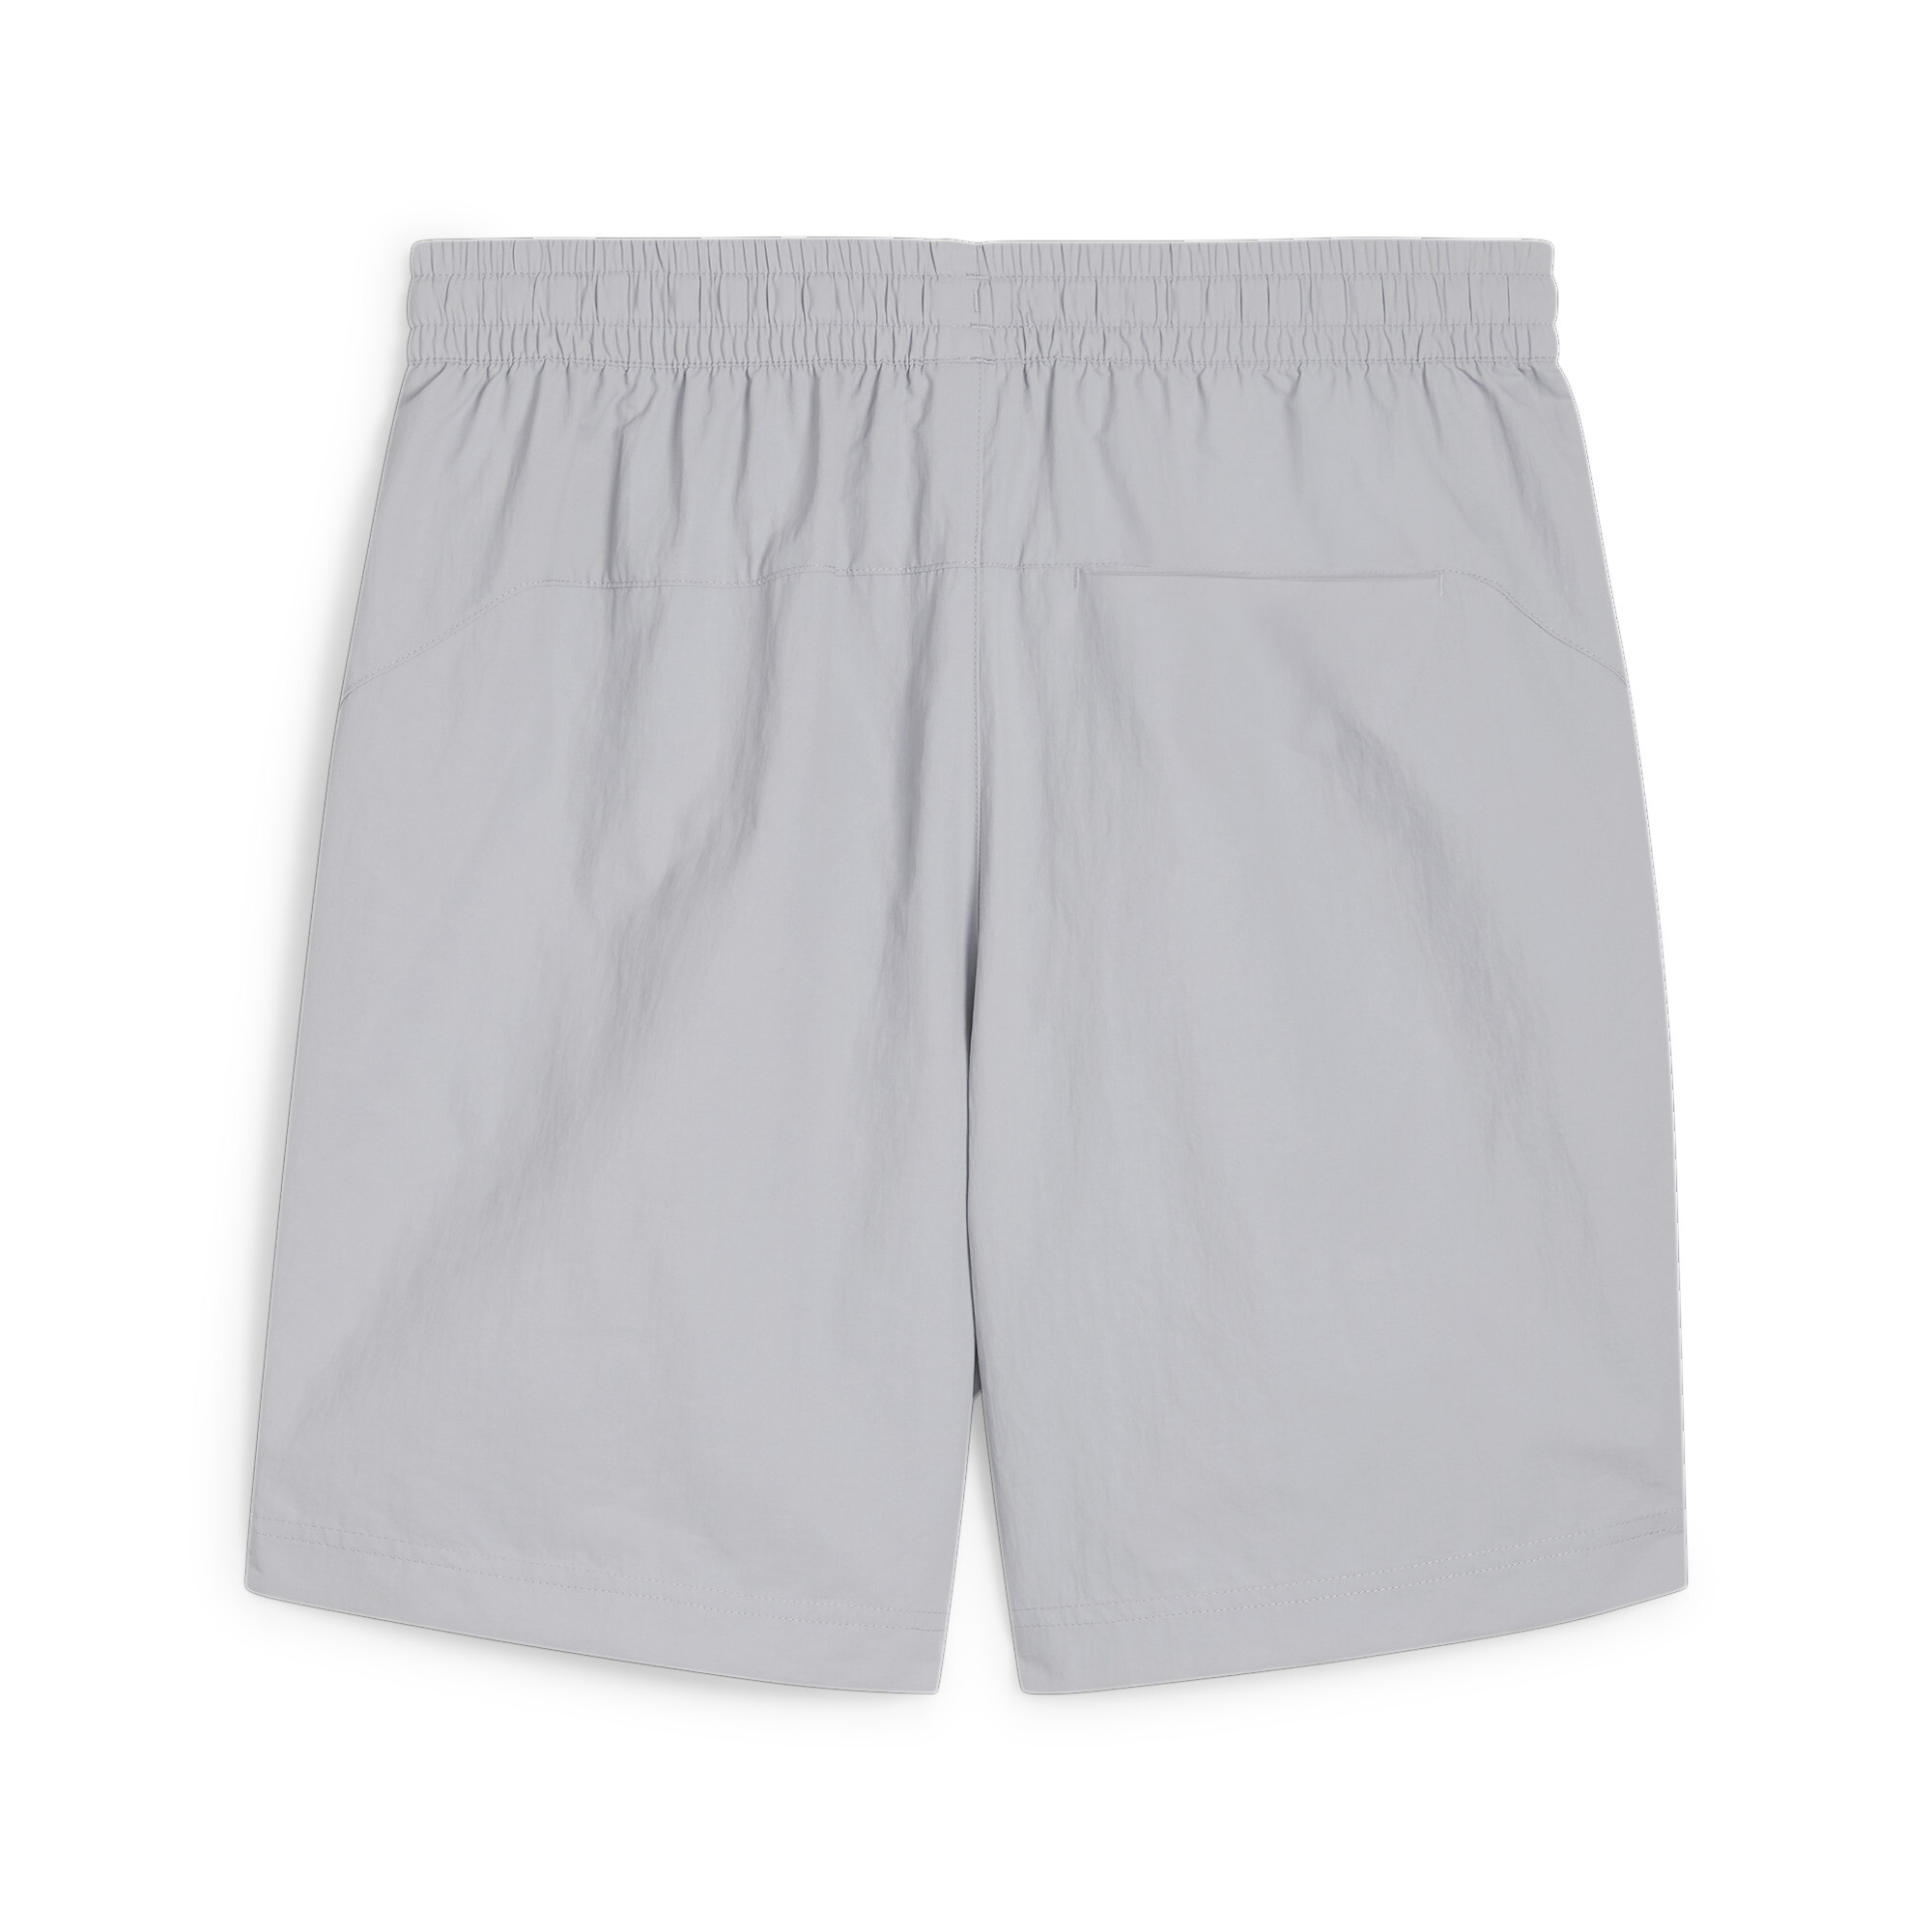 Men's Puma CLASSICS's Cargo Shorts, Gray, Size XL, Clothing